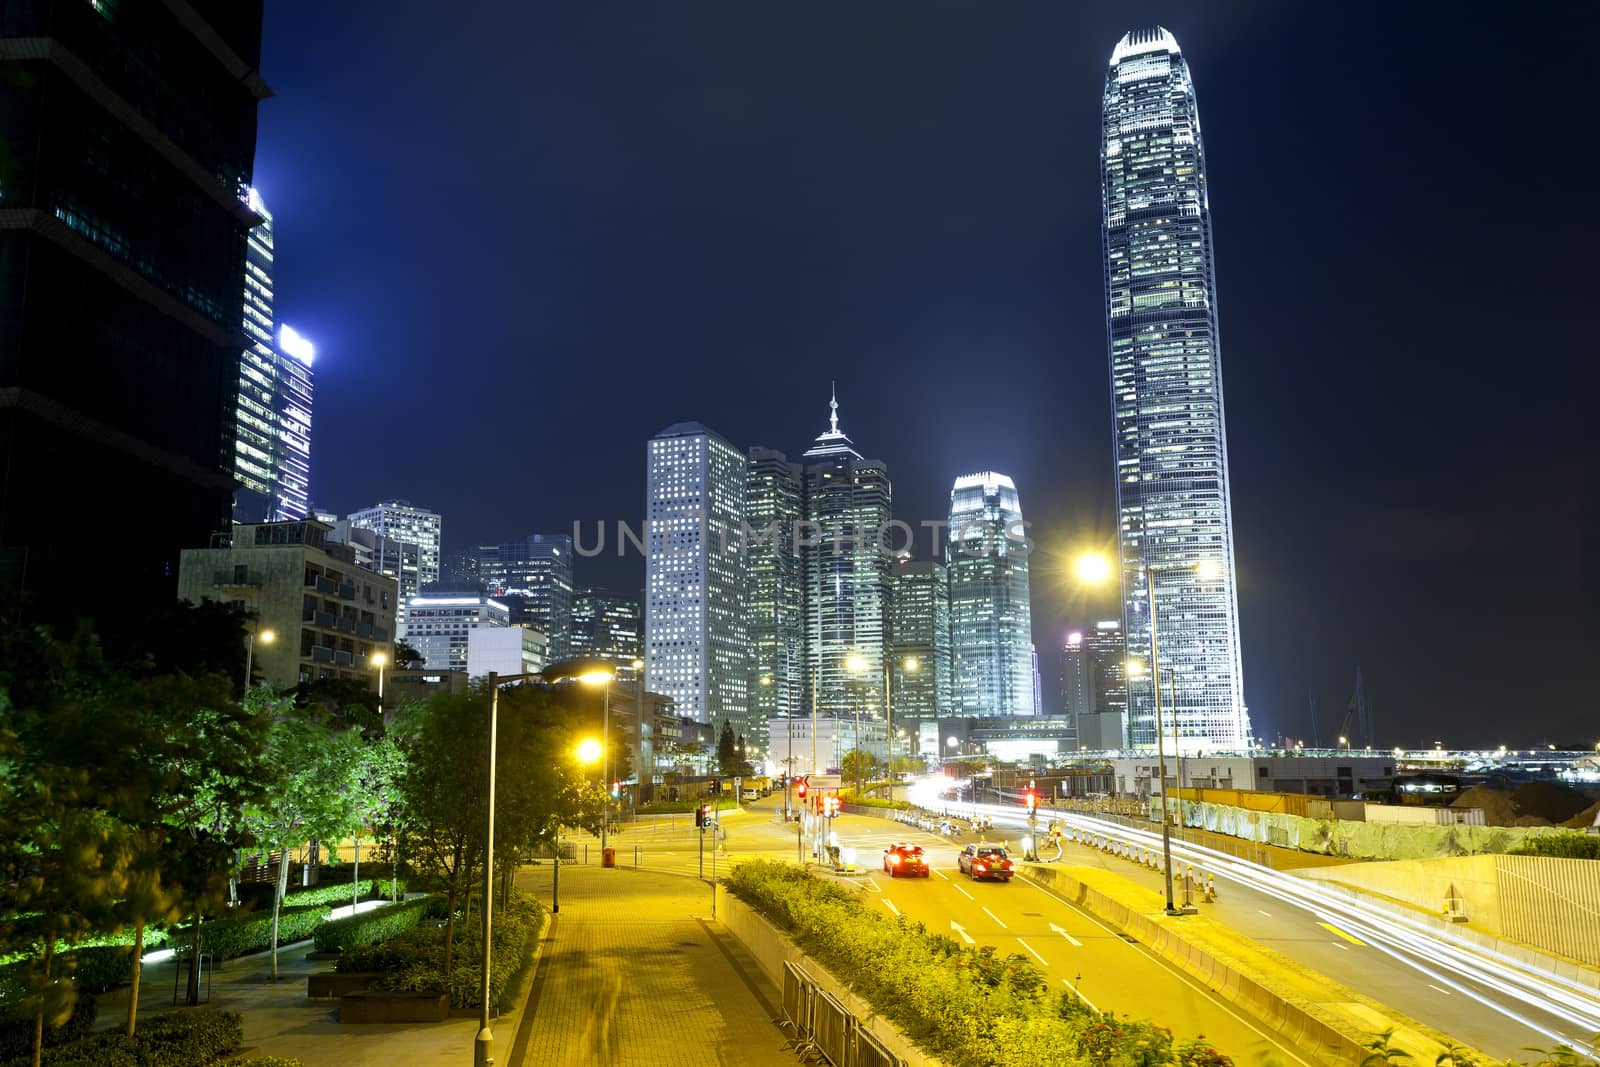 Hong Kong traffic and skyscraper offices at night by kawing921